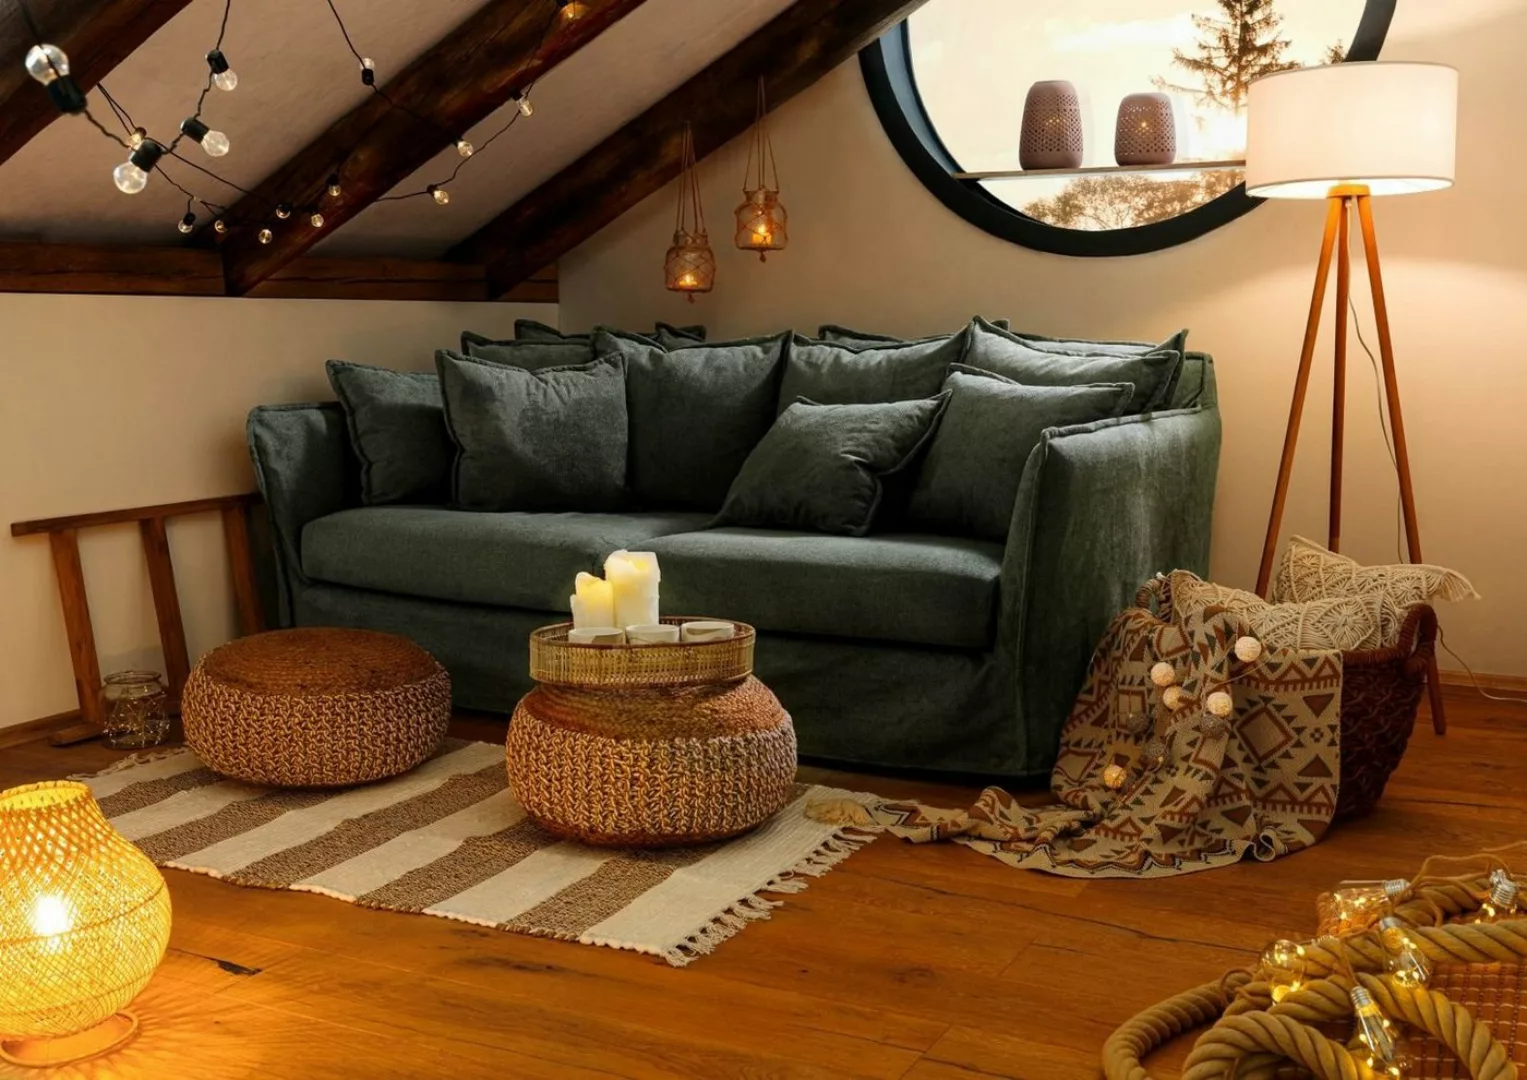 Massivmoebel24 Sofa Sofa 2-Sitzer 210x140x88 grün AMY günstig online kaufen